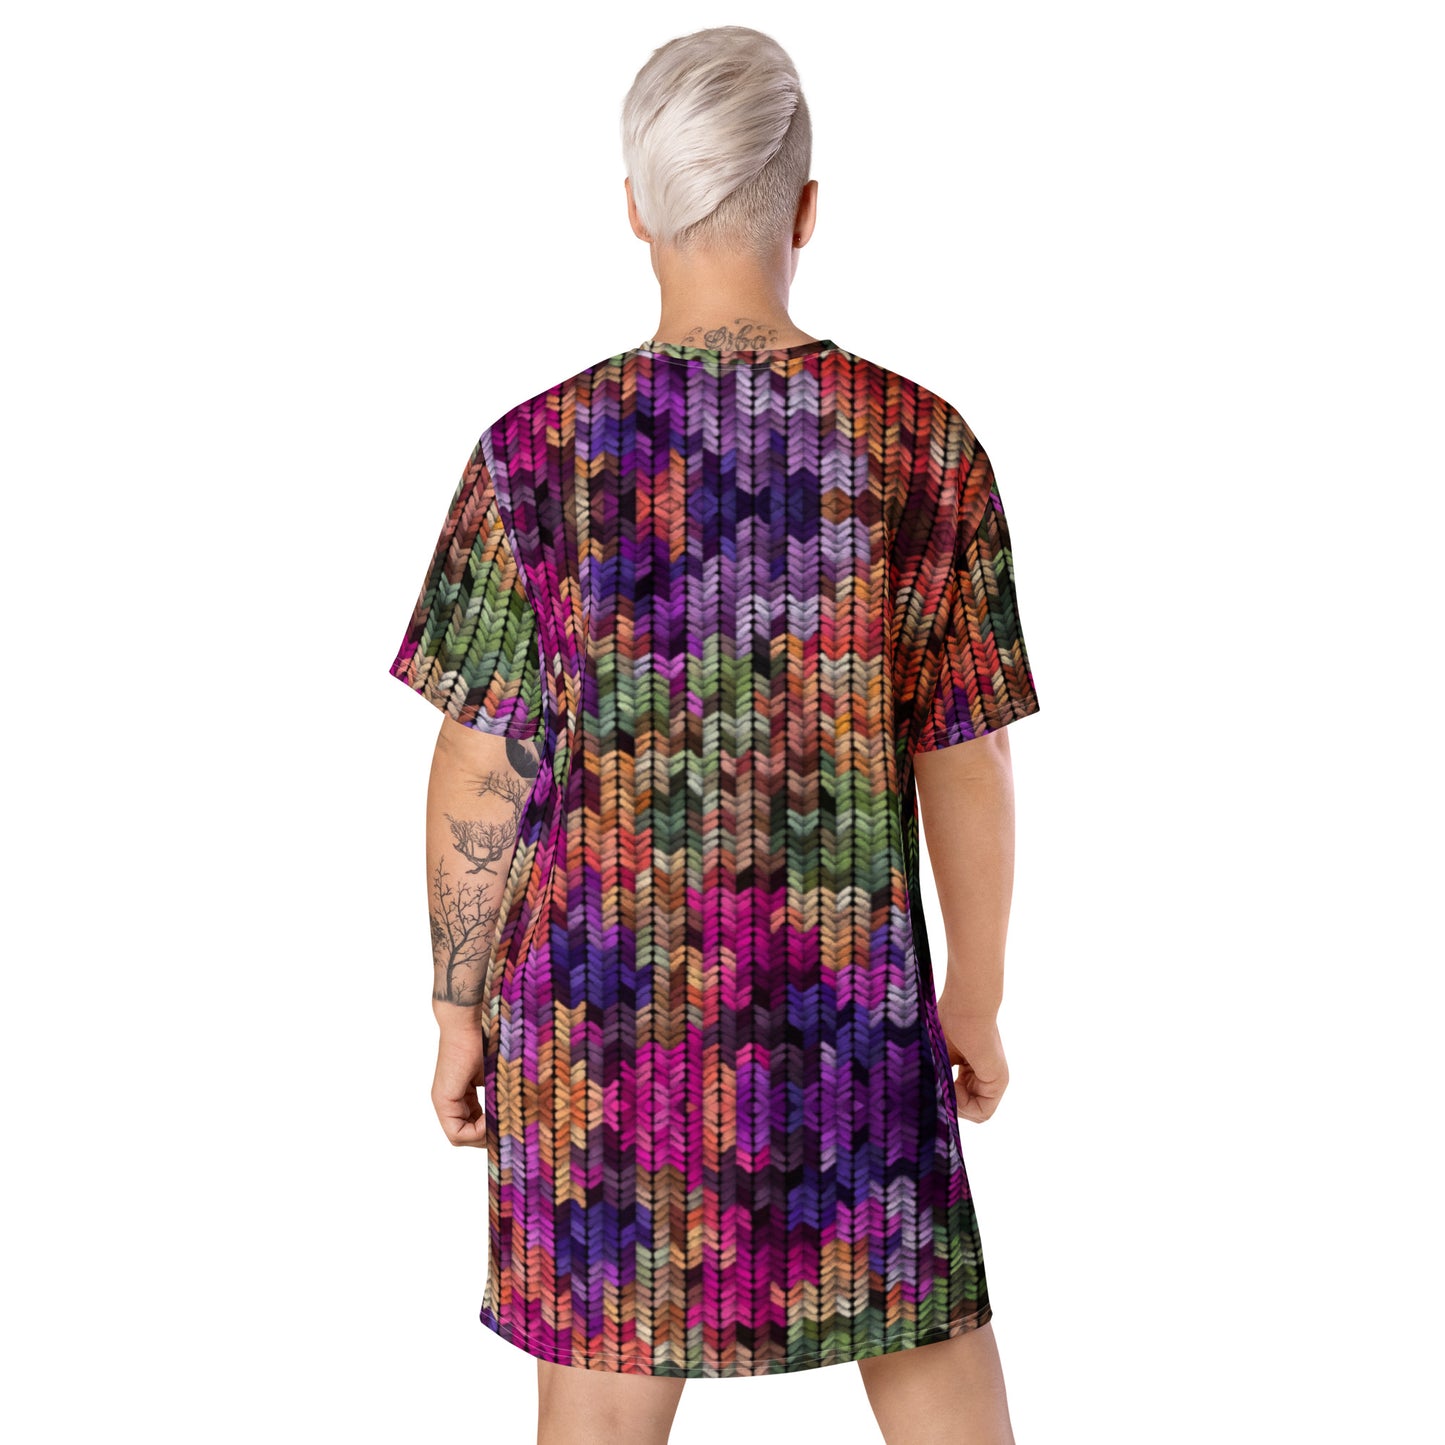 Knit n FullColor T-shirt dress